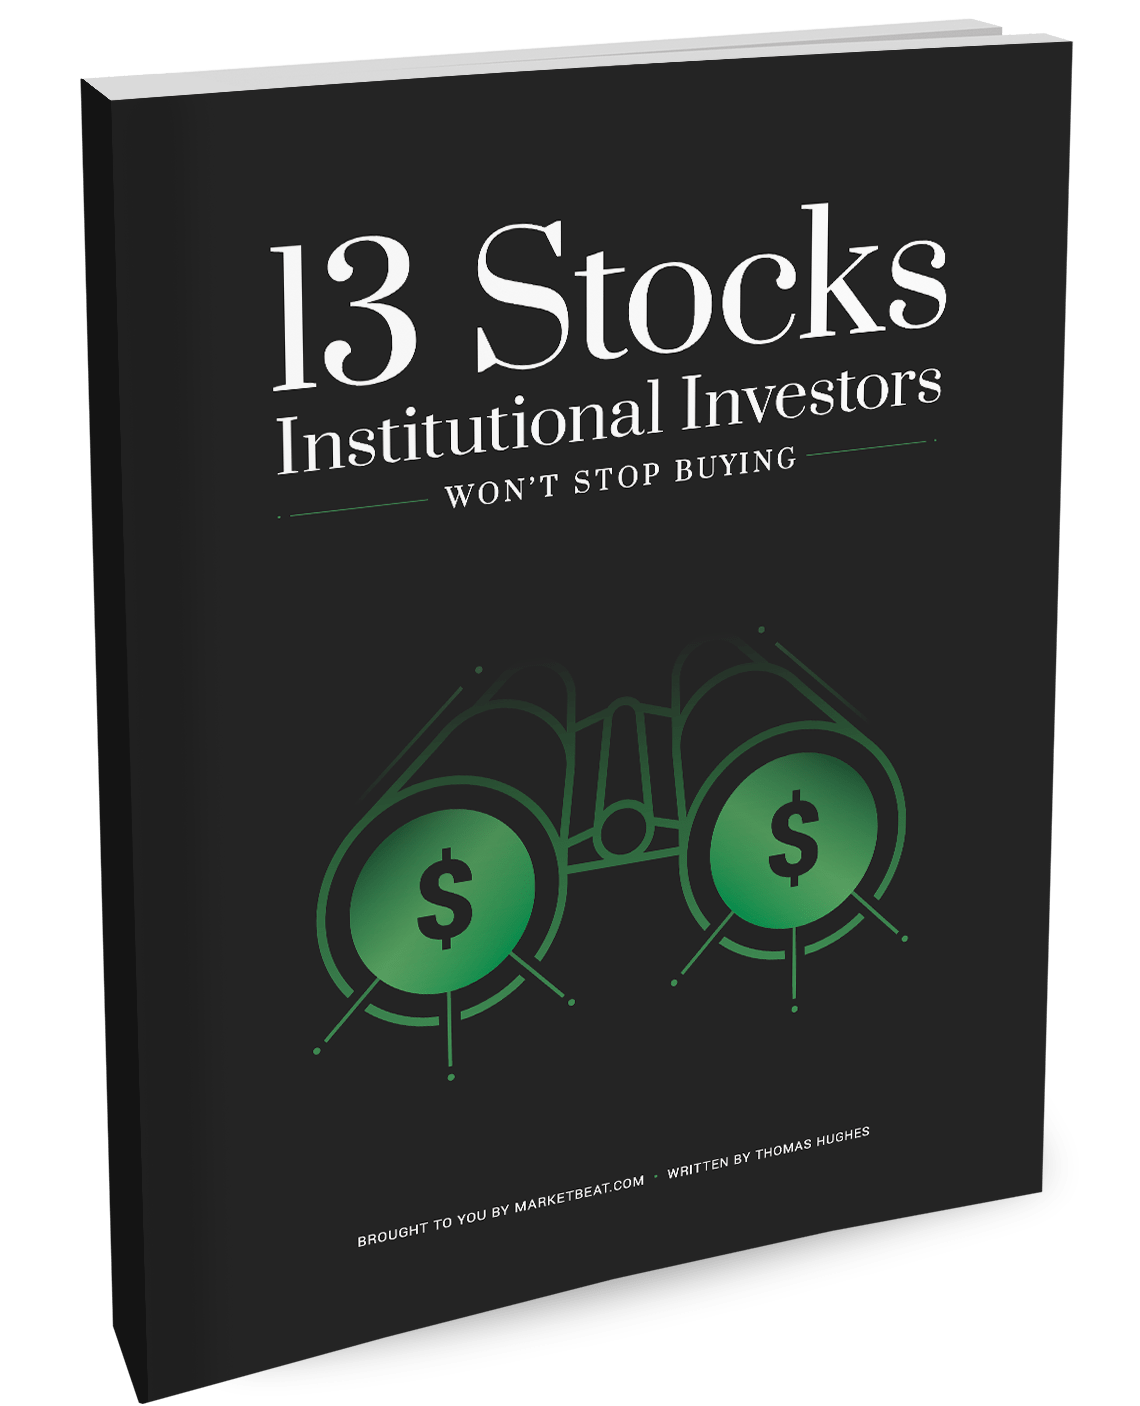 13 Stocks Institutional Investors Won't Stop Buying